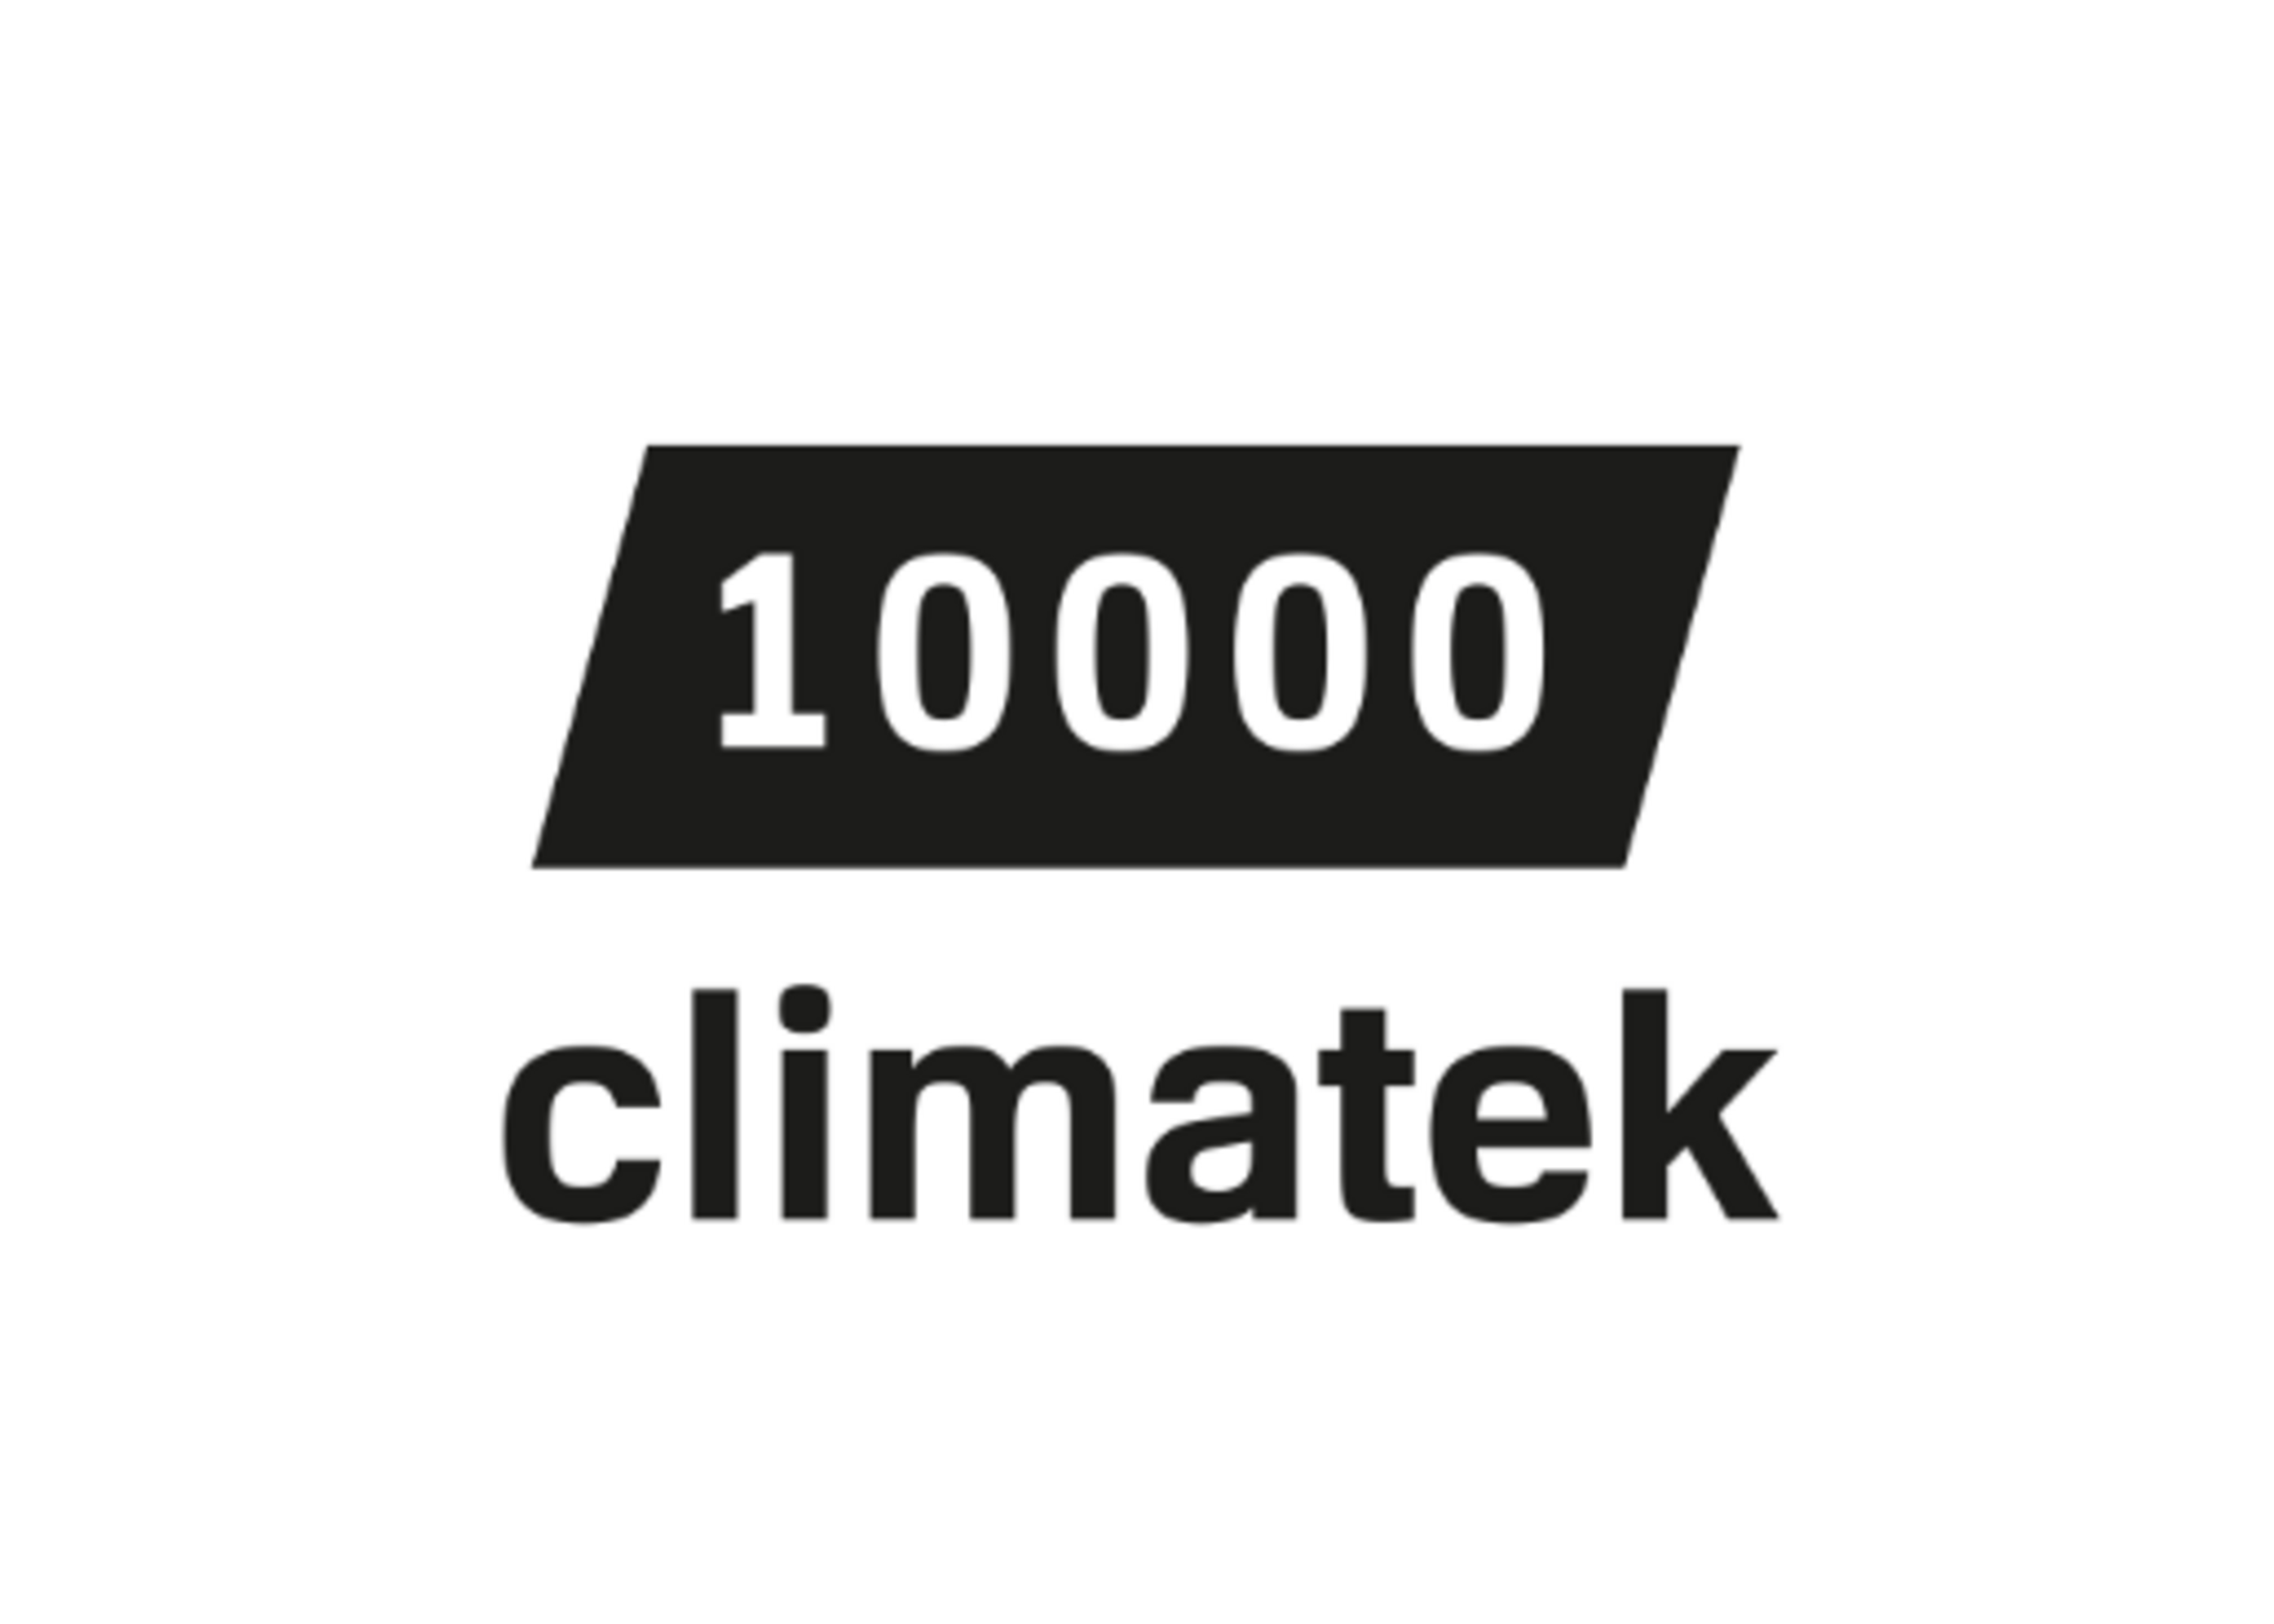 Climateck - 10000